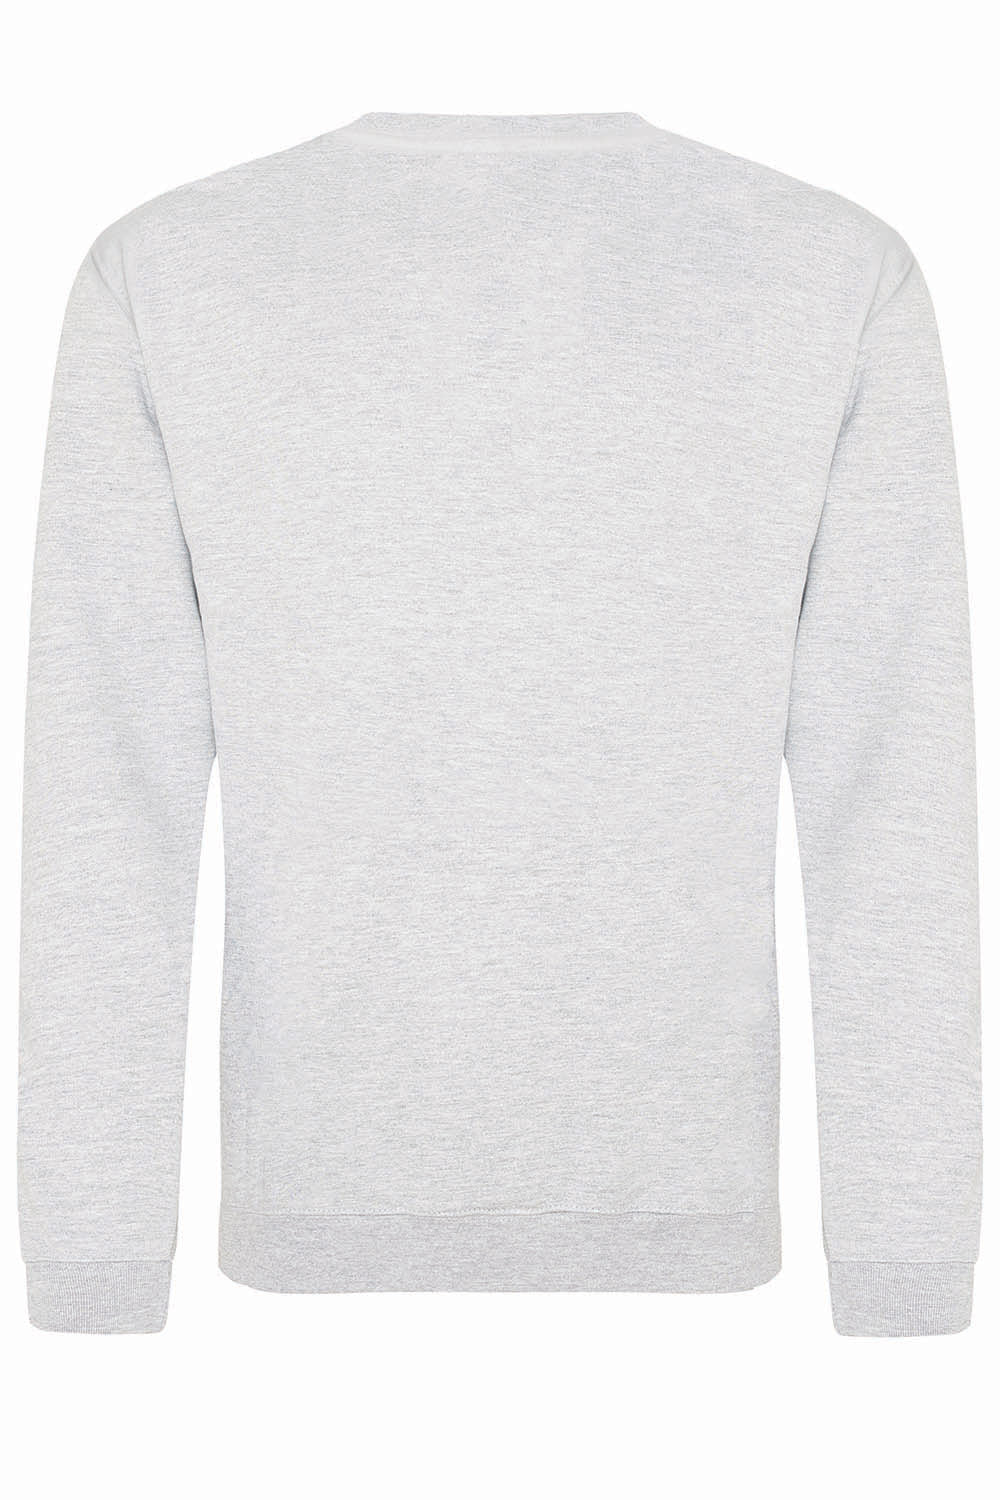 Grey 'Washington DC' Sweatshirt